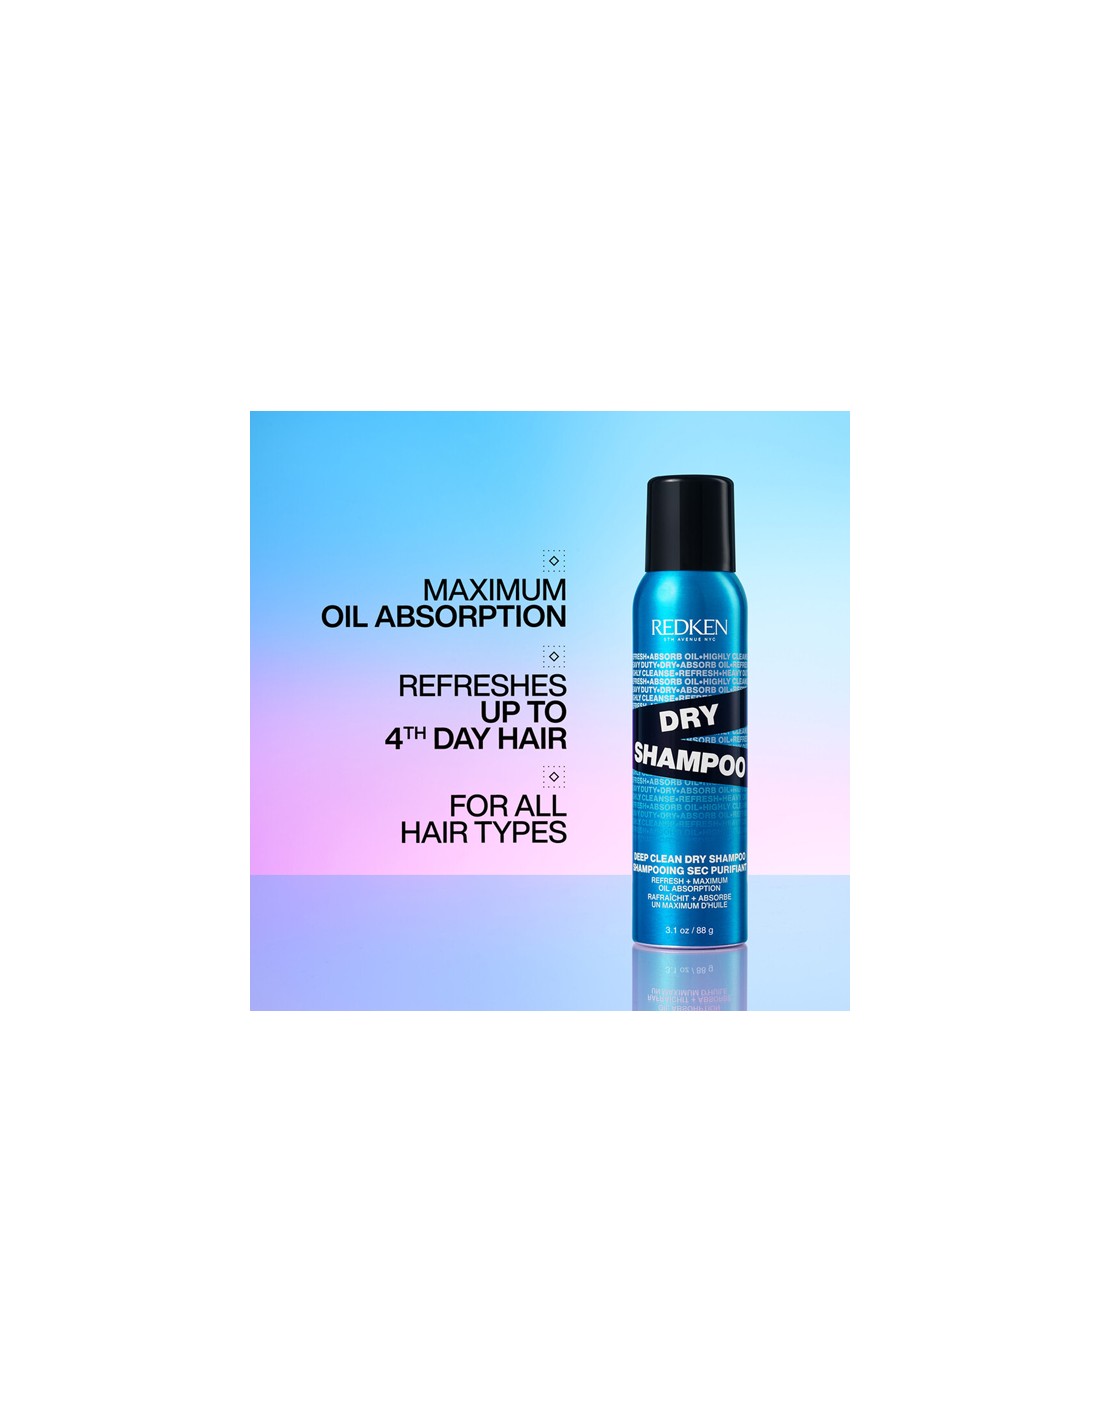 Redken Deep Clean Dry shampoo - 88g